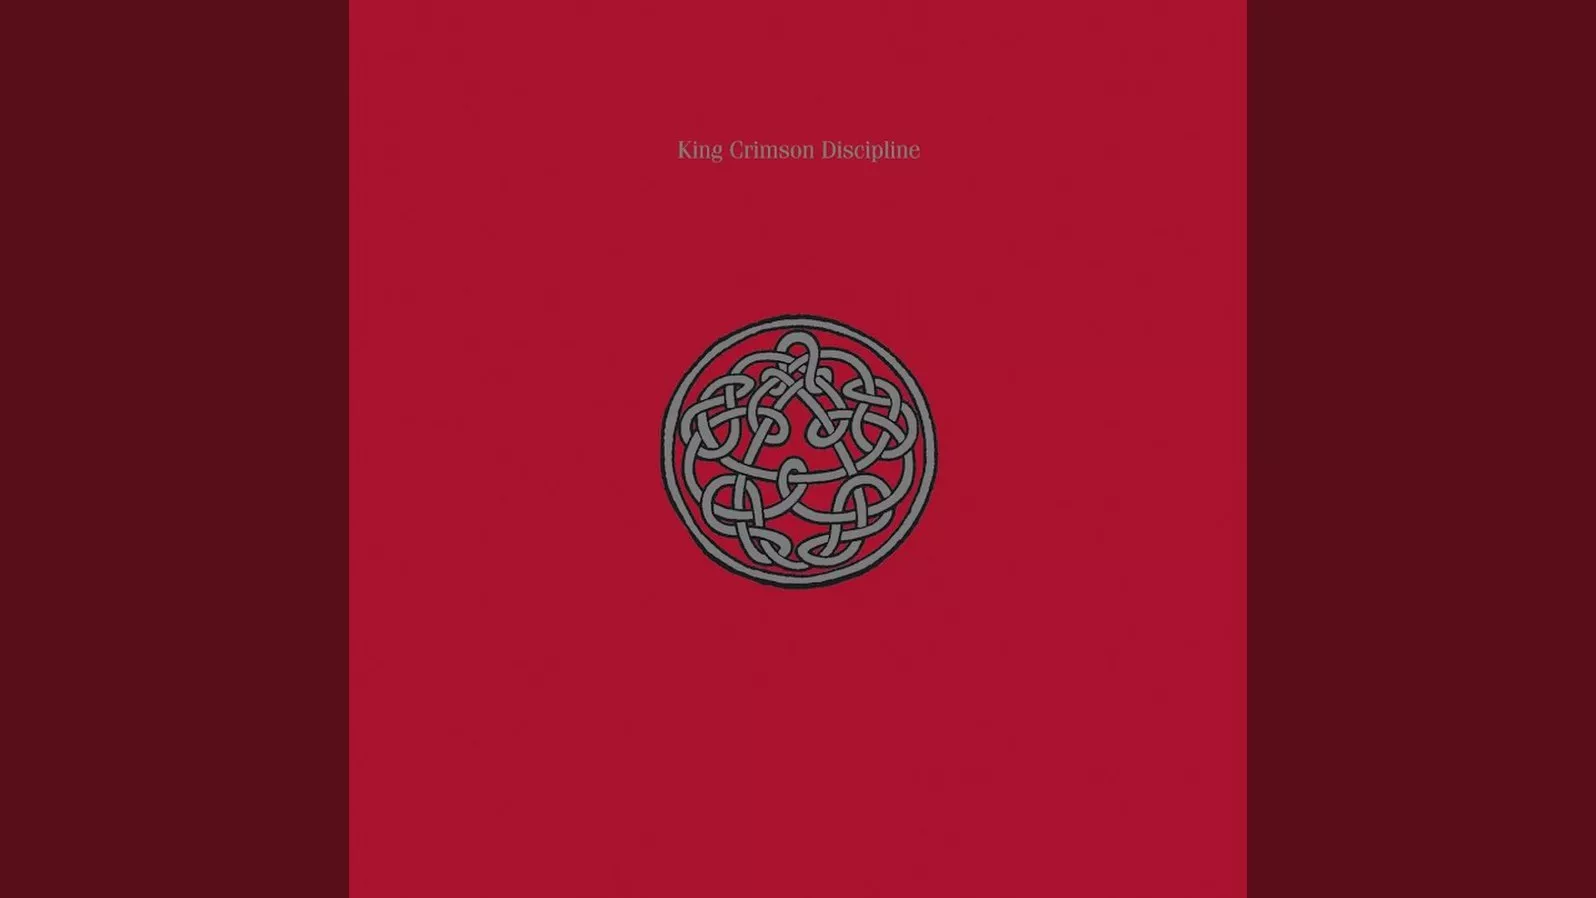 The story behind the record cover - Discipline (1981) - King Crimson -  Poppodium Boerderij